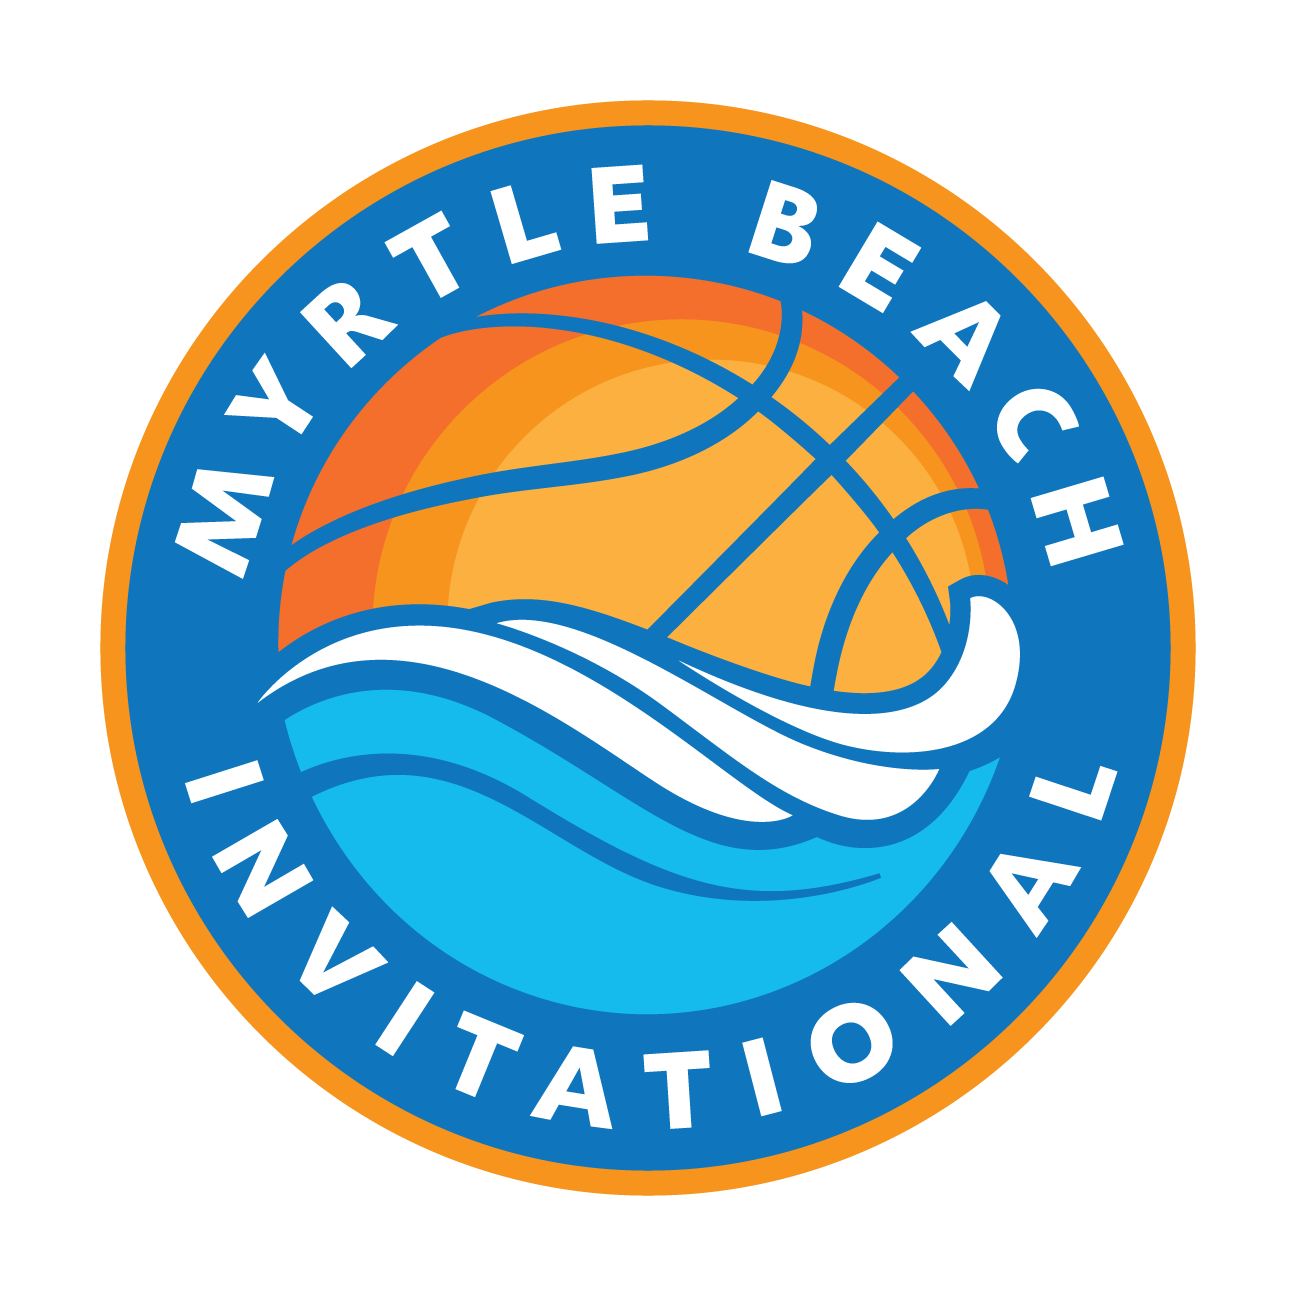 Myrtle beach invitaitonal logo